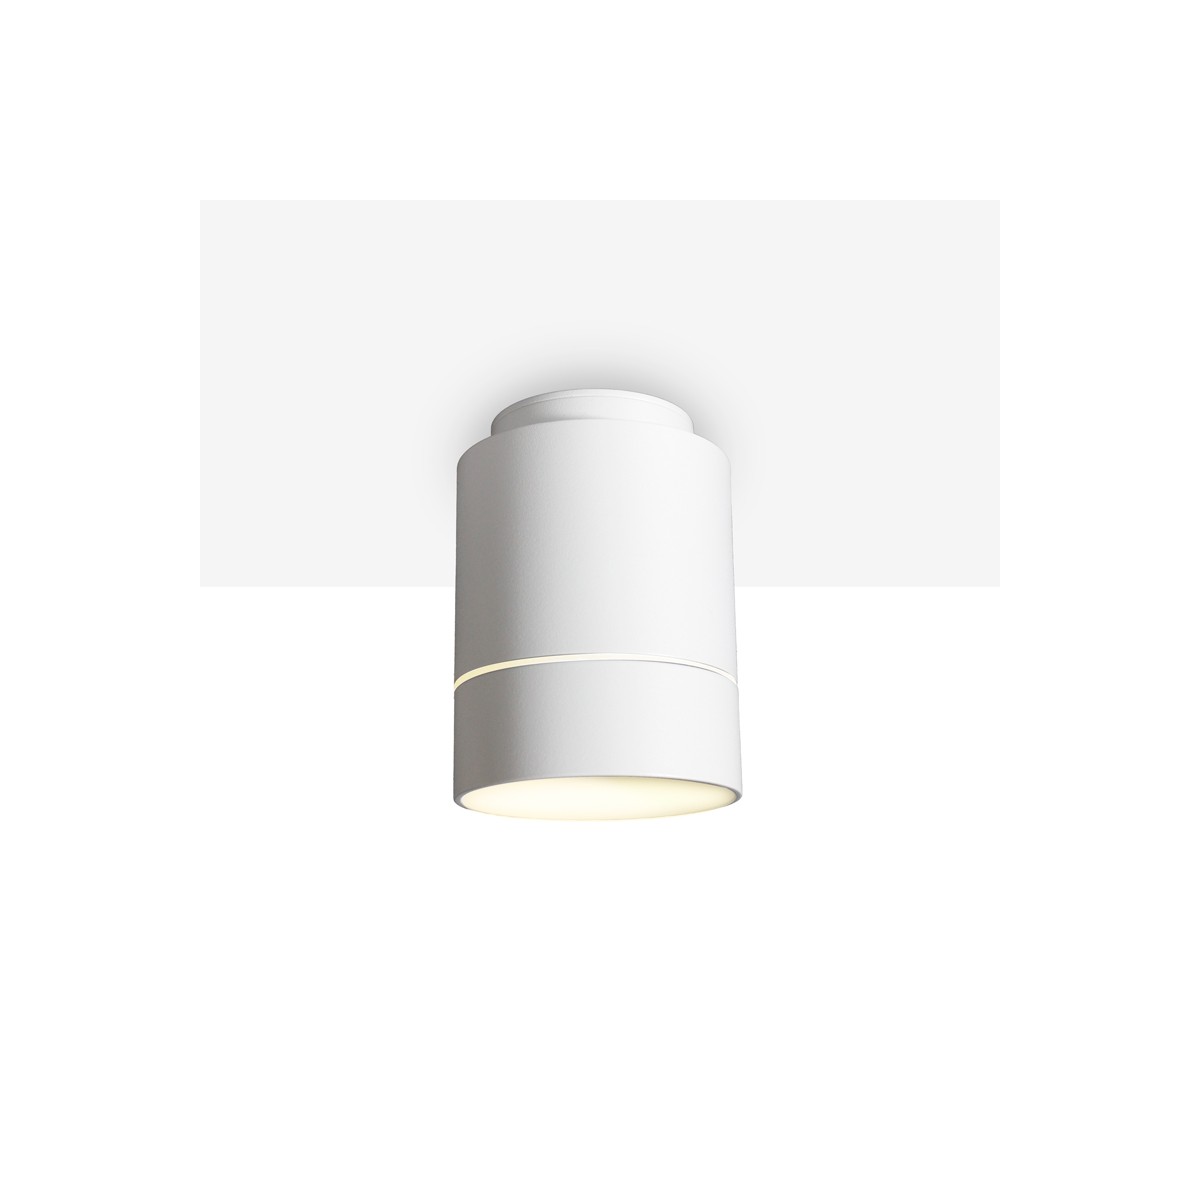 Modern ceiling lamp "Roller" 7W with Driver Lifud DALI/PUSH